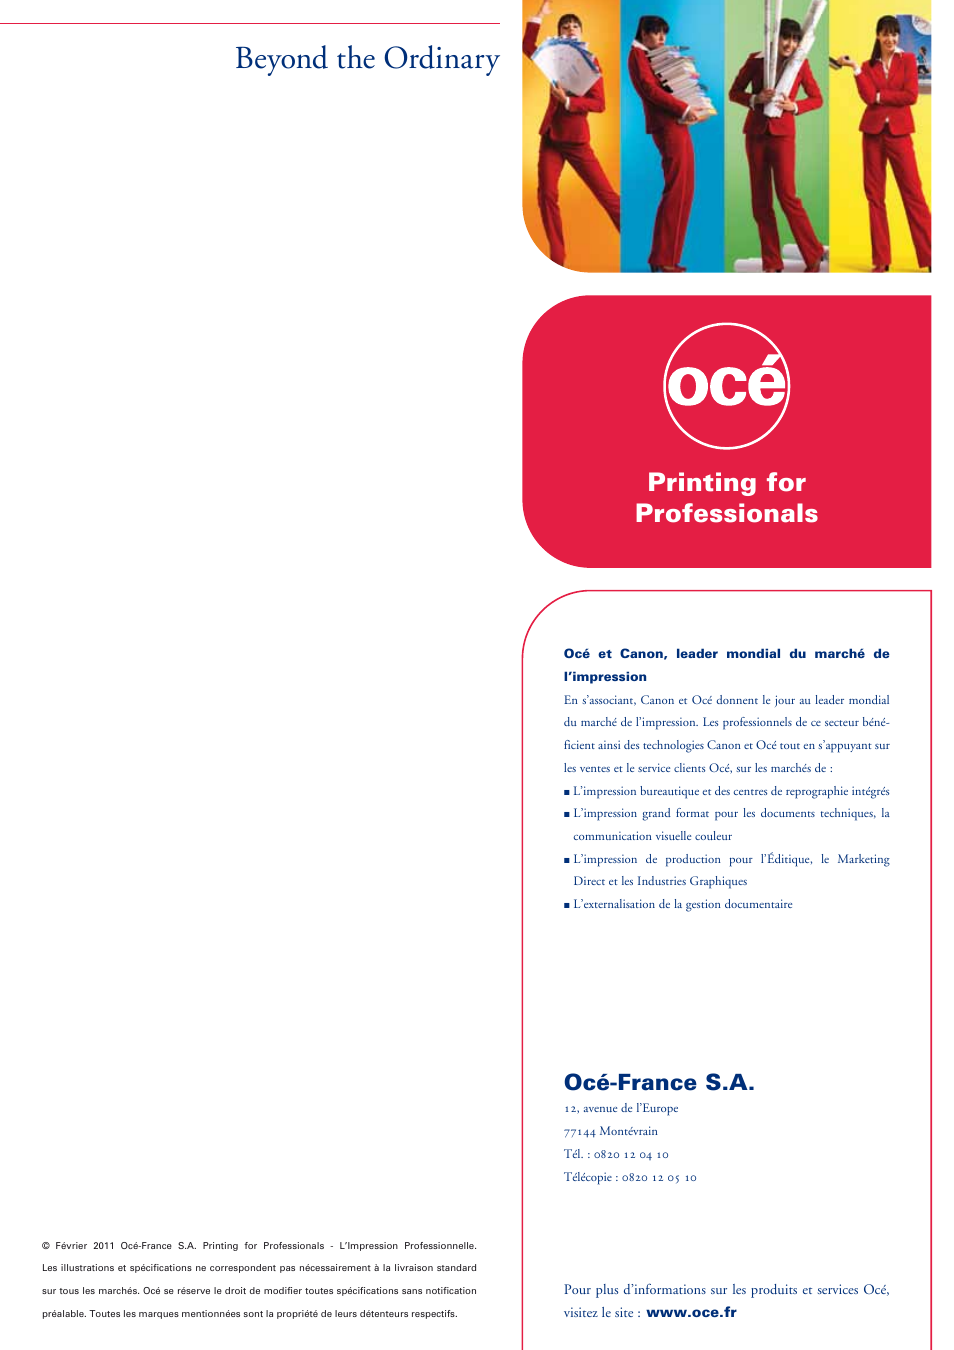 Beyond the ordinary, Printingfor professionals, Océ-frances.a | Canon Océ Posviewer Manuel d'utilisation | Page 4 / 4